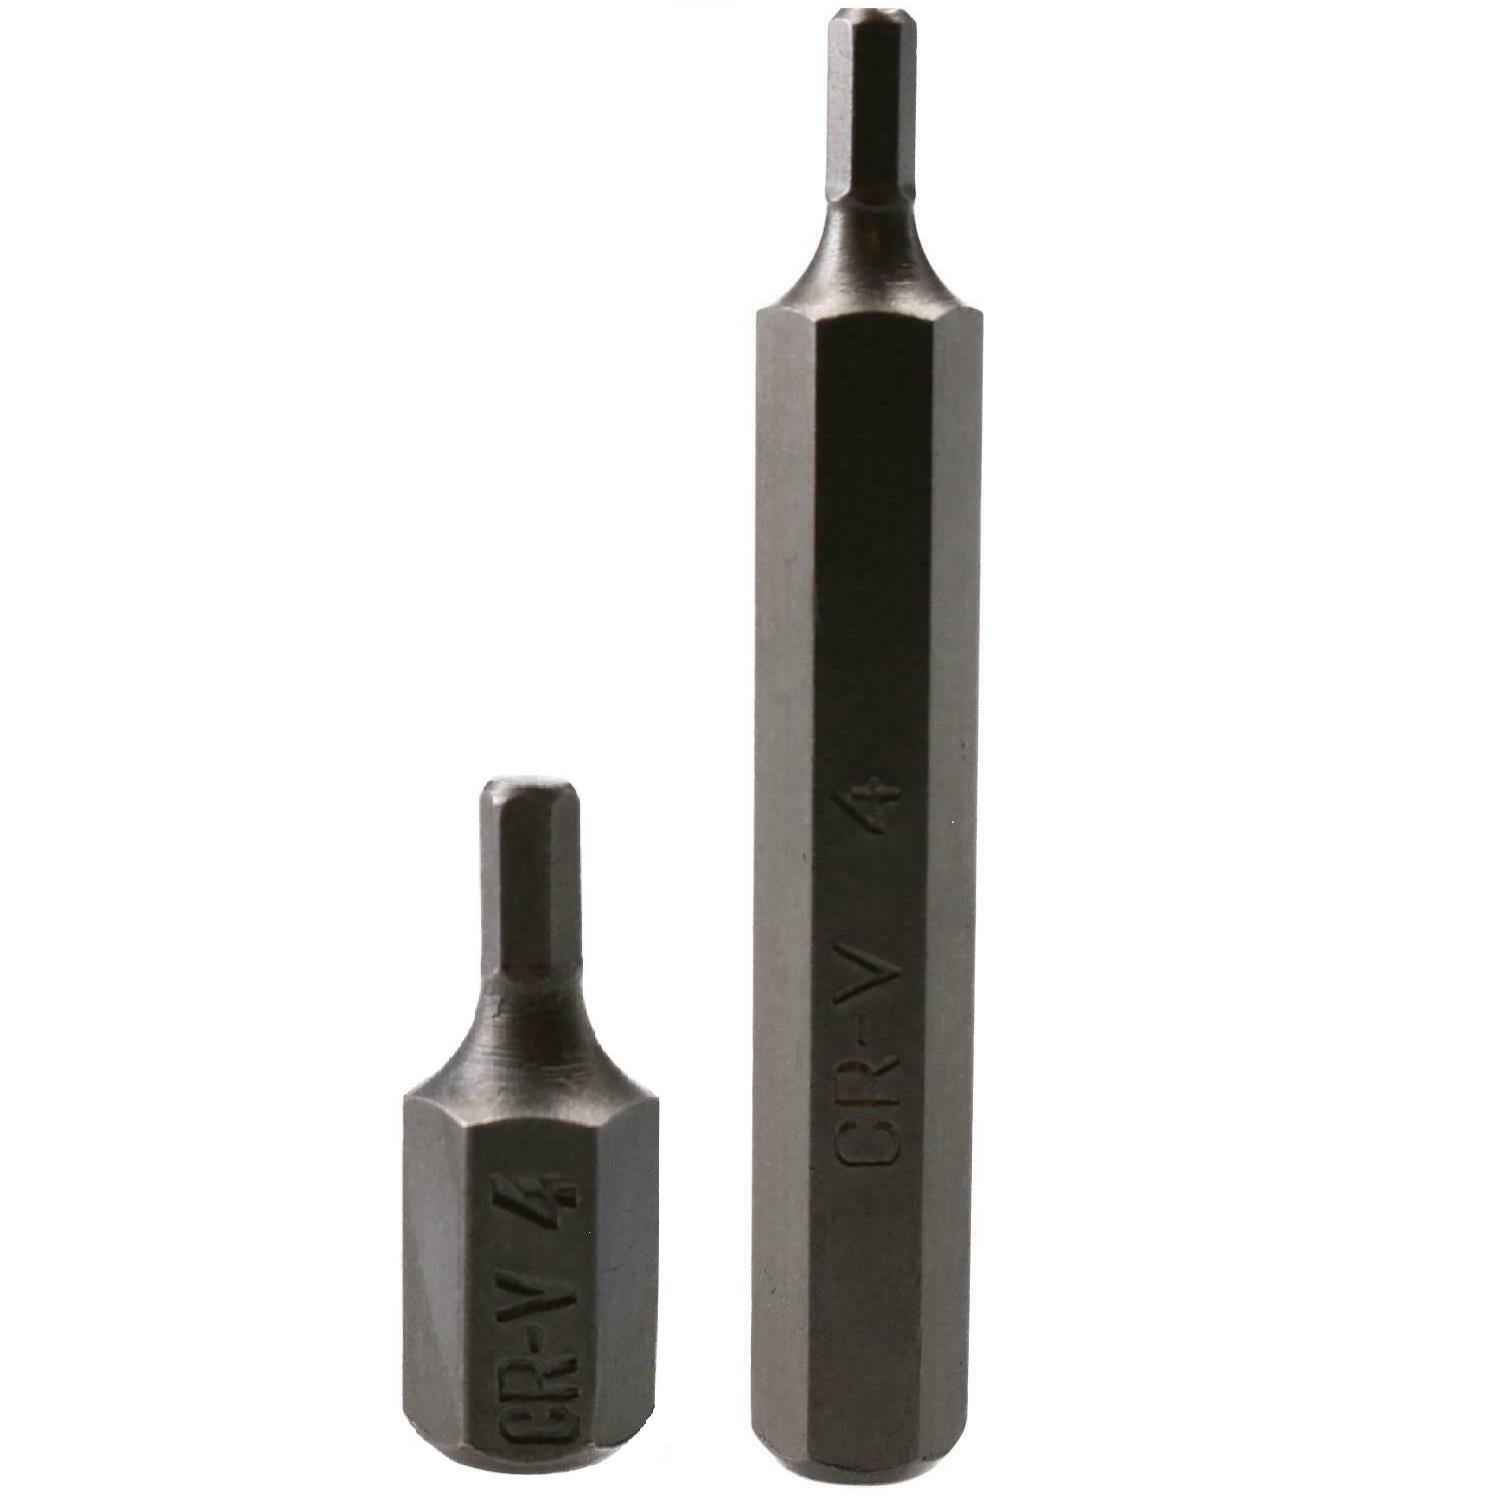 Metric MM 4mm – 12mm Hex Allen Key Bits With 10mm Shank Short or Deep